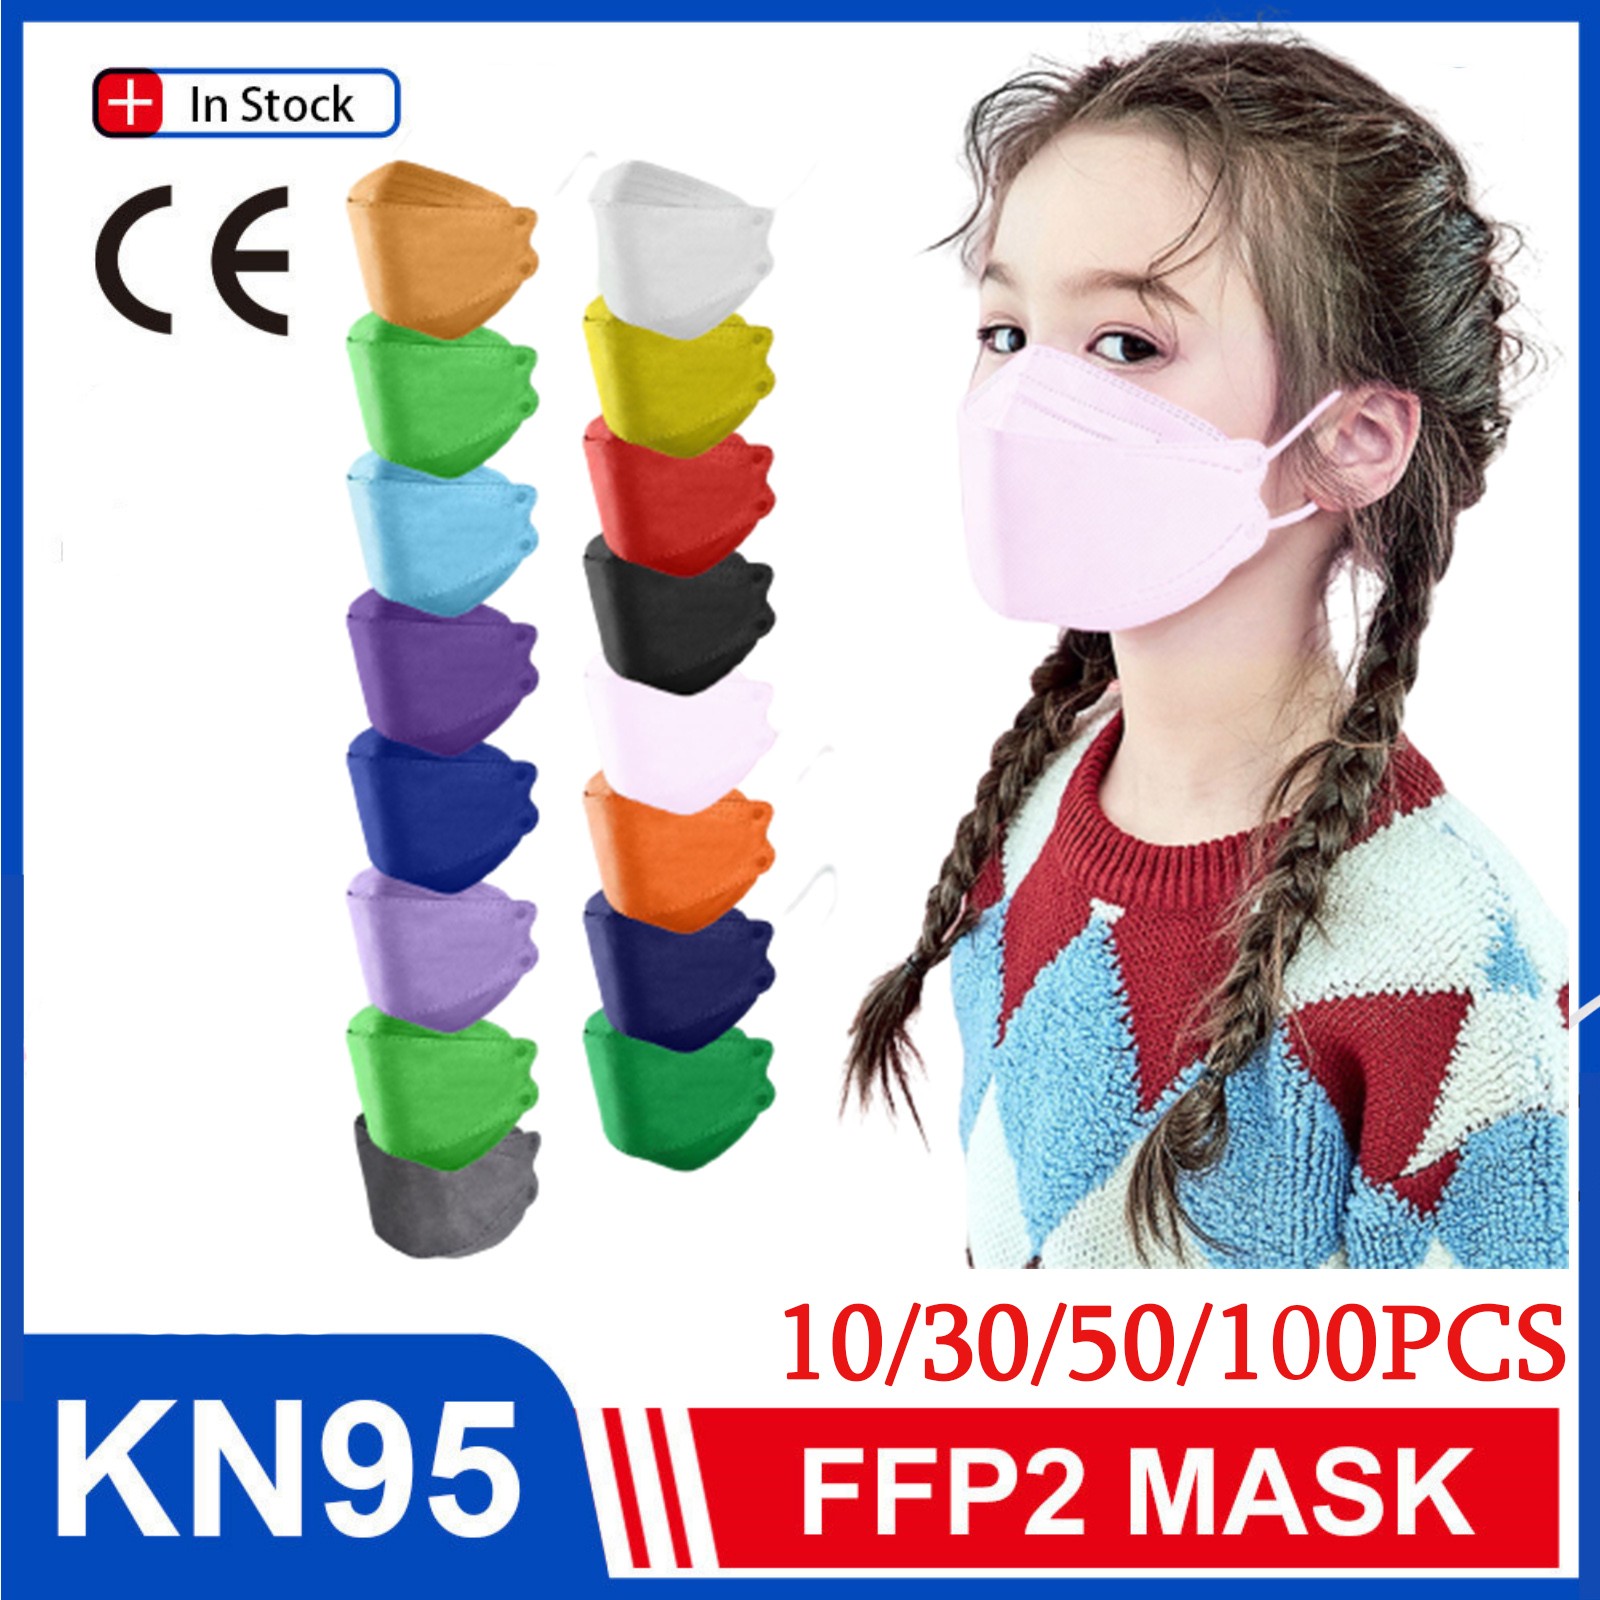 Children KN95 Fish Face Mask Solid Color FFP2 CE Mask Non-woven 15 Colors mascarillas fpp2 mask 10/30/50/100pcs mixed